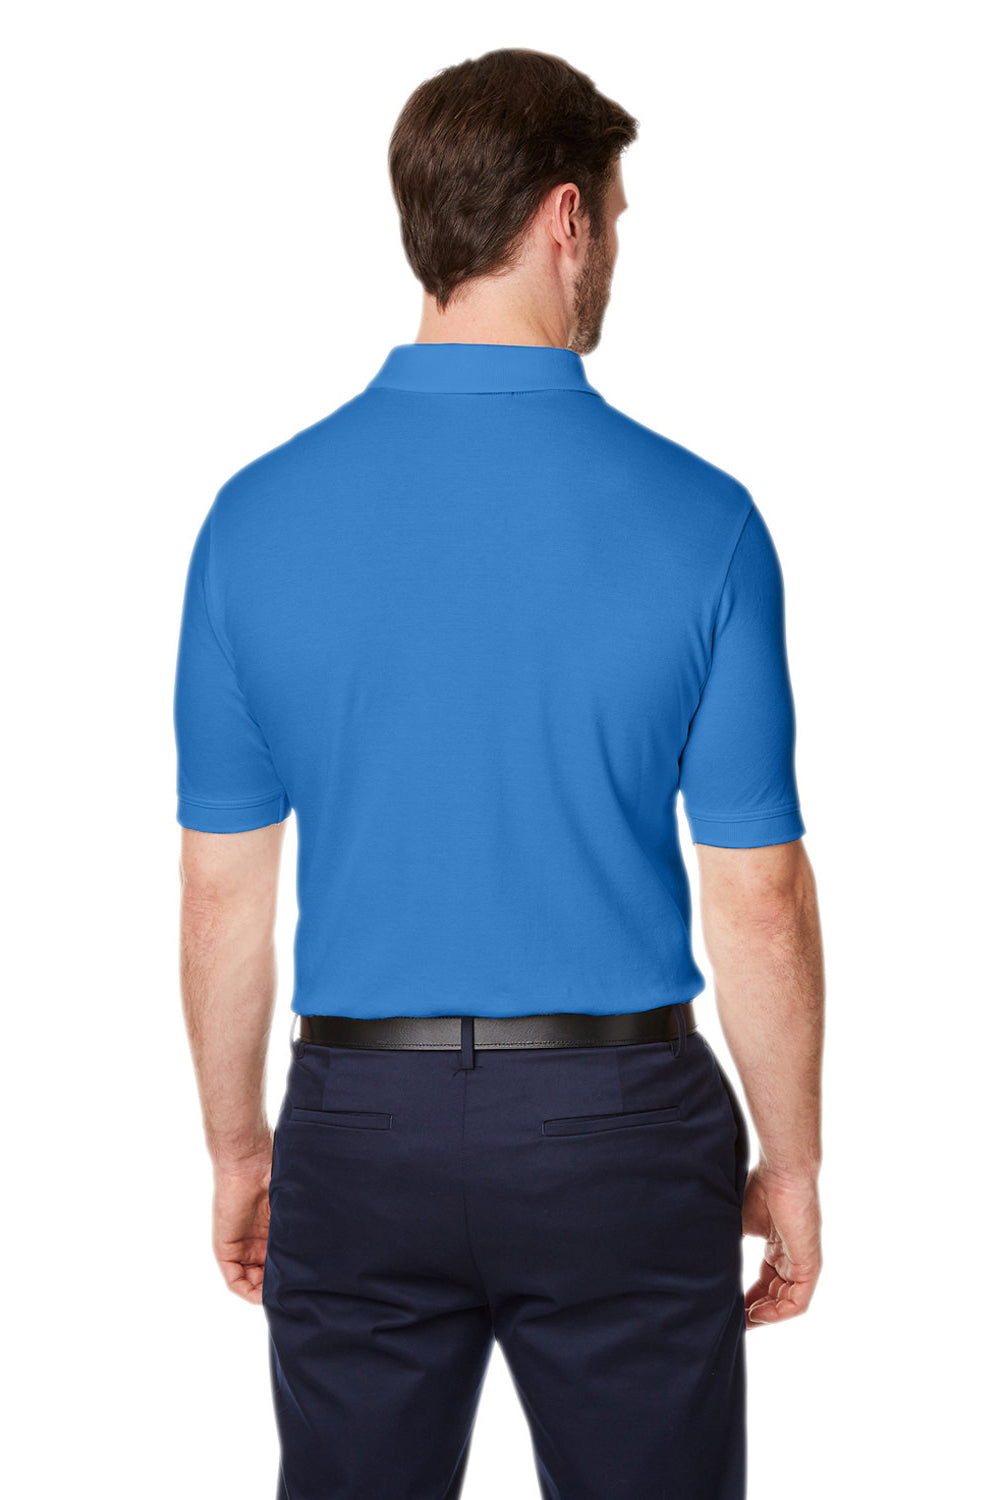 Devon & Jones DG100 Mens New Classics Performance Moisture Wicking Short Sleeve Polo Shirt French Blue Back